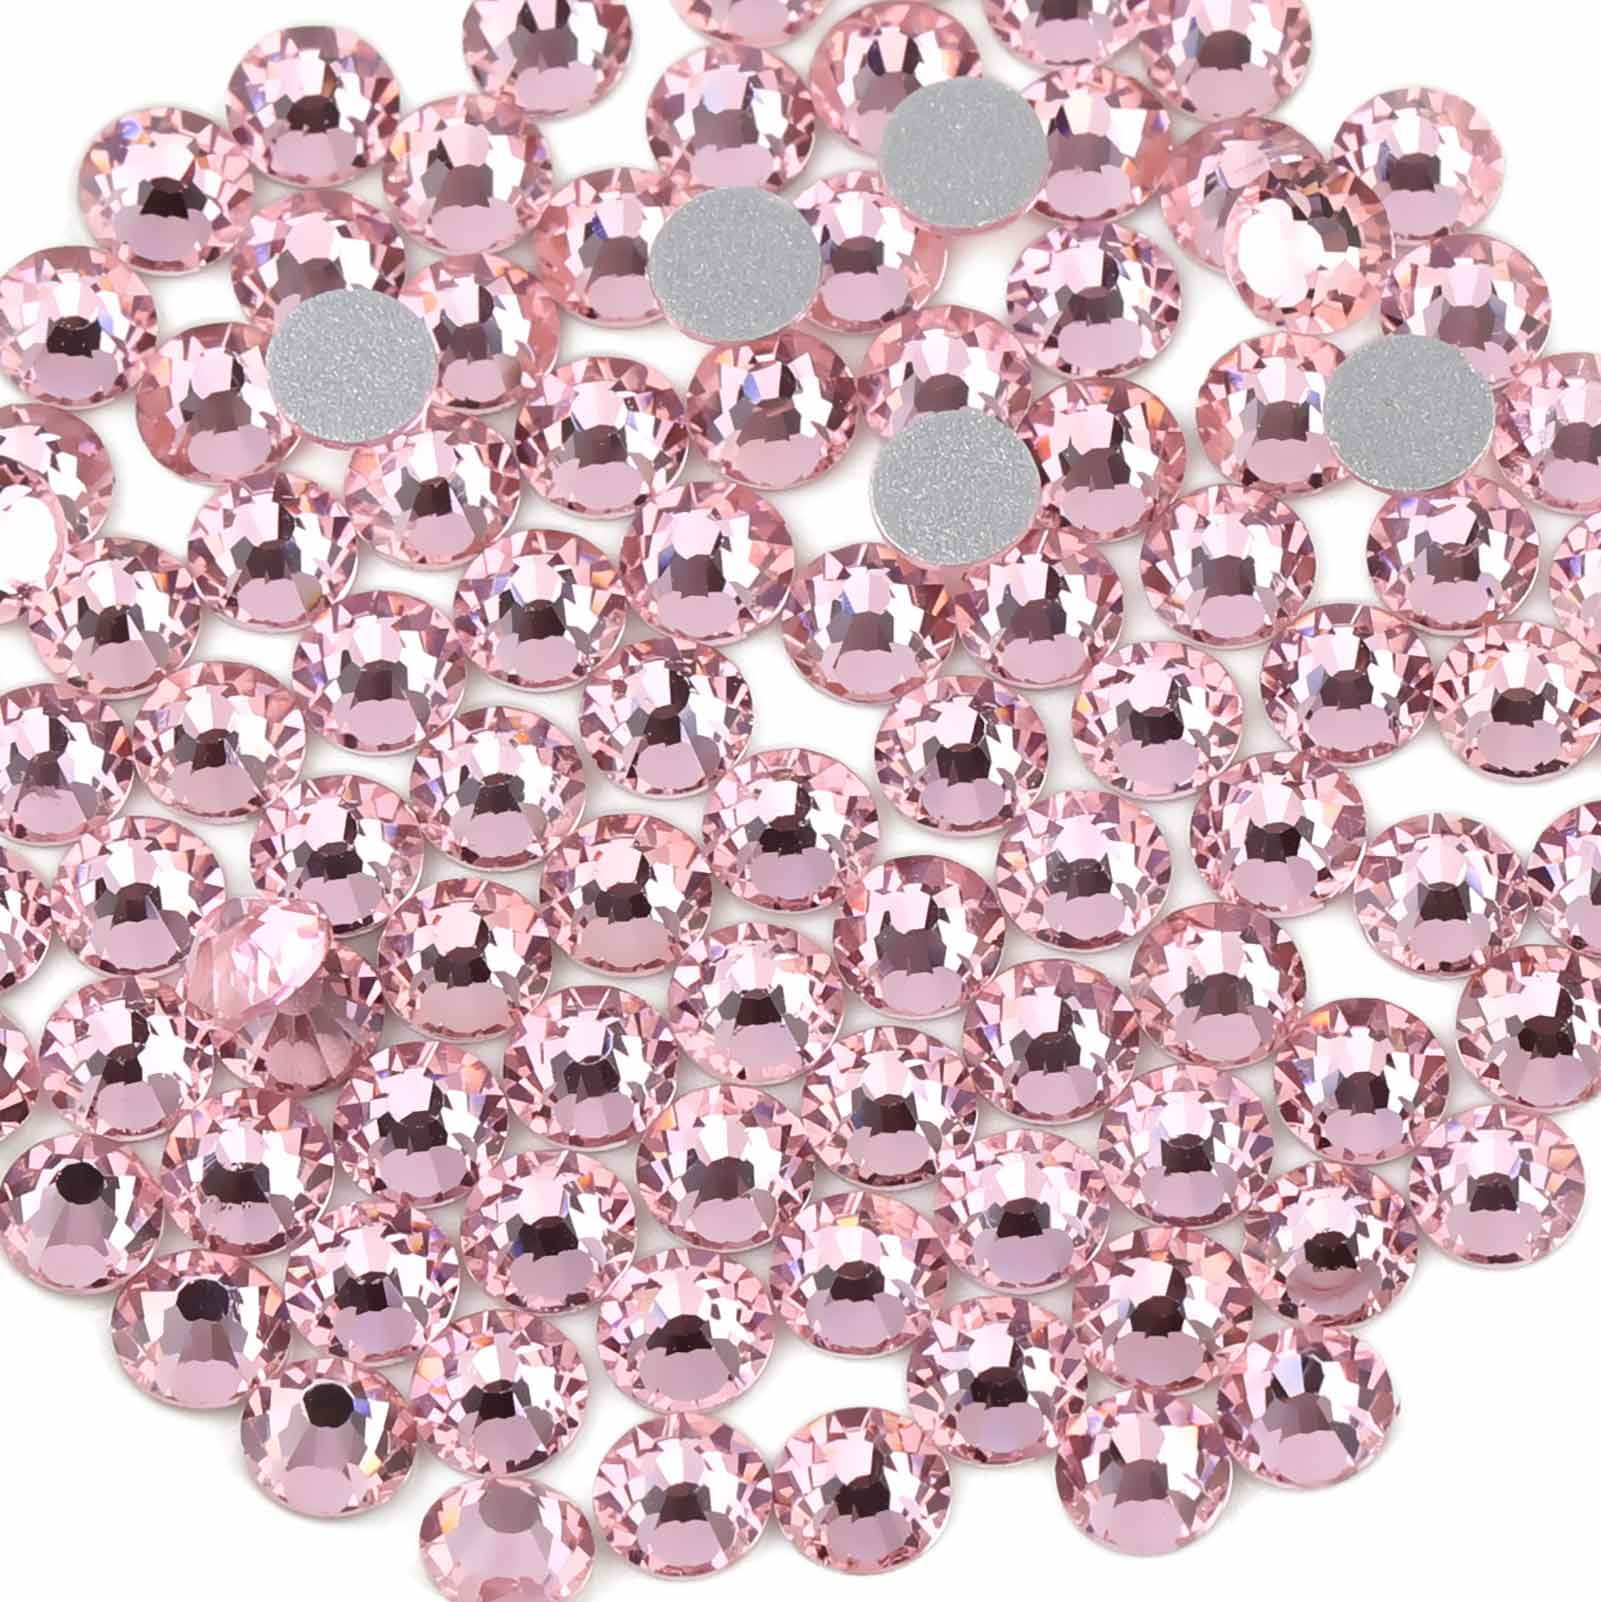 Beadsland Hotfix Rhinestones, 288Pcs Flatback Crystal Rhinestones For  Crafts Clothes Diy Decorations, Light Pink Ab, Ss30